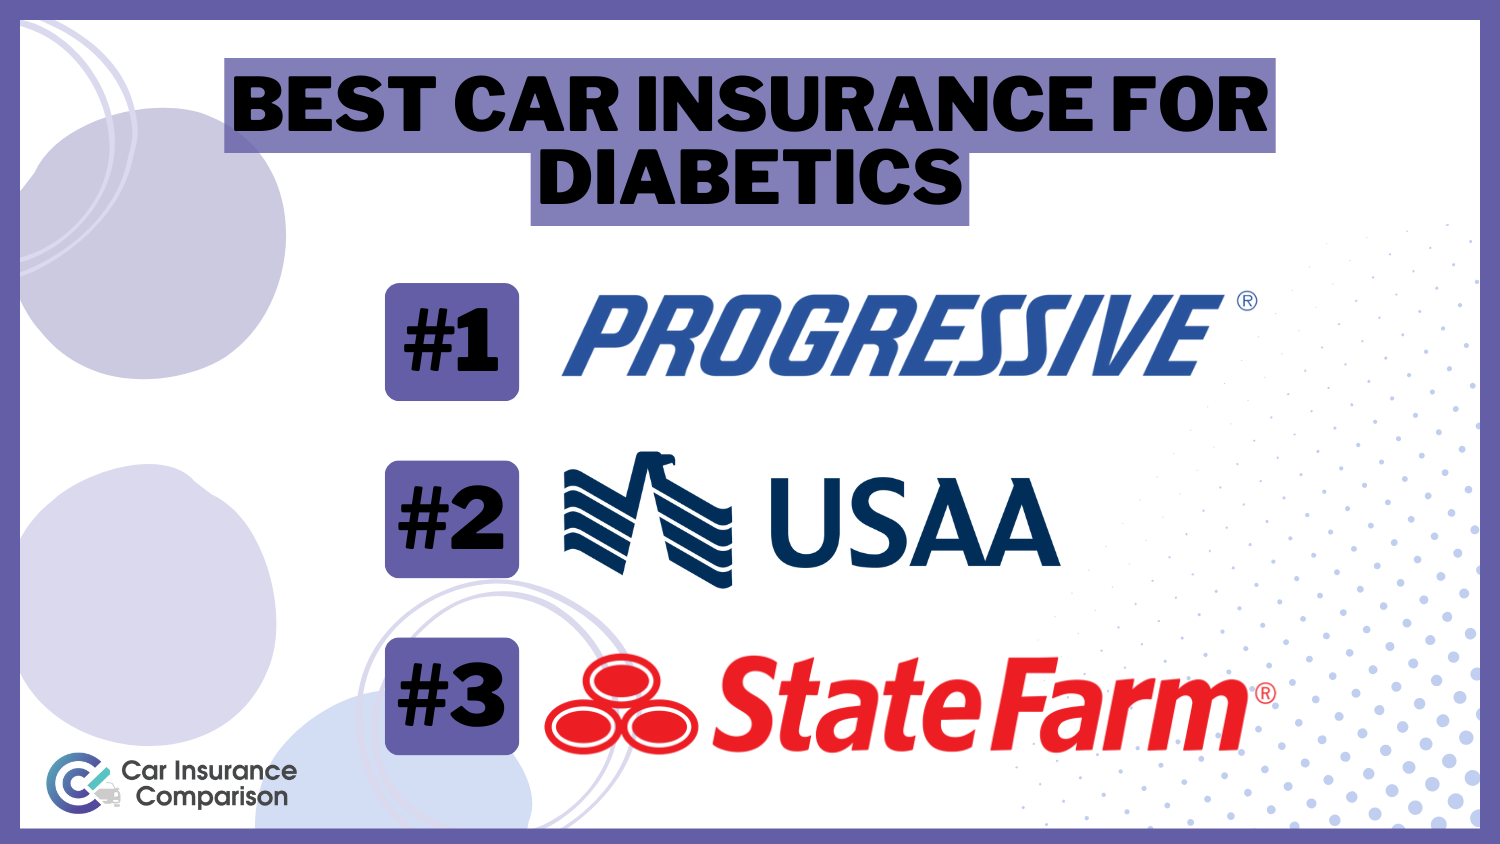 3 Best Car Insurance for Diabetics: Progressive, USAA, and State Farm.